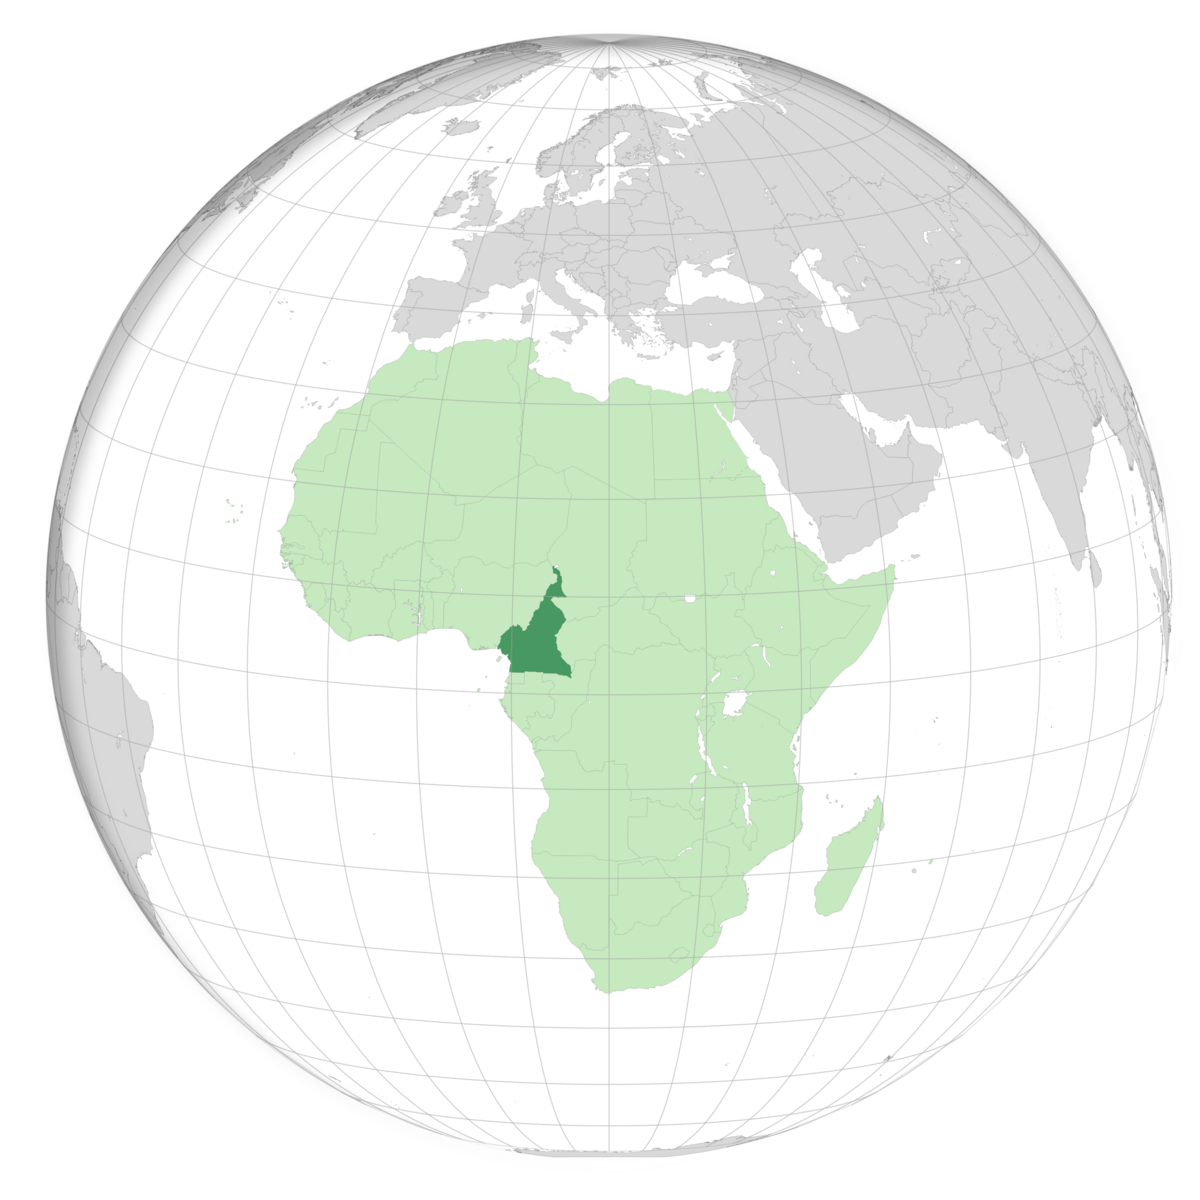 Kamerun, plassering